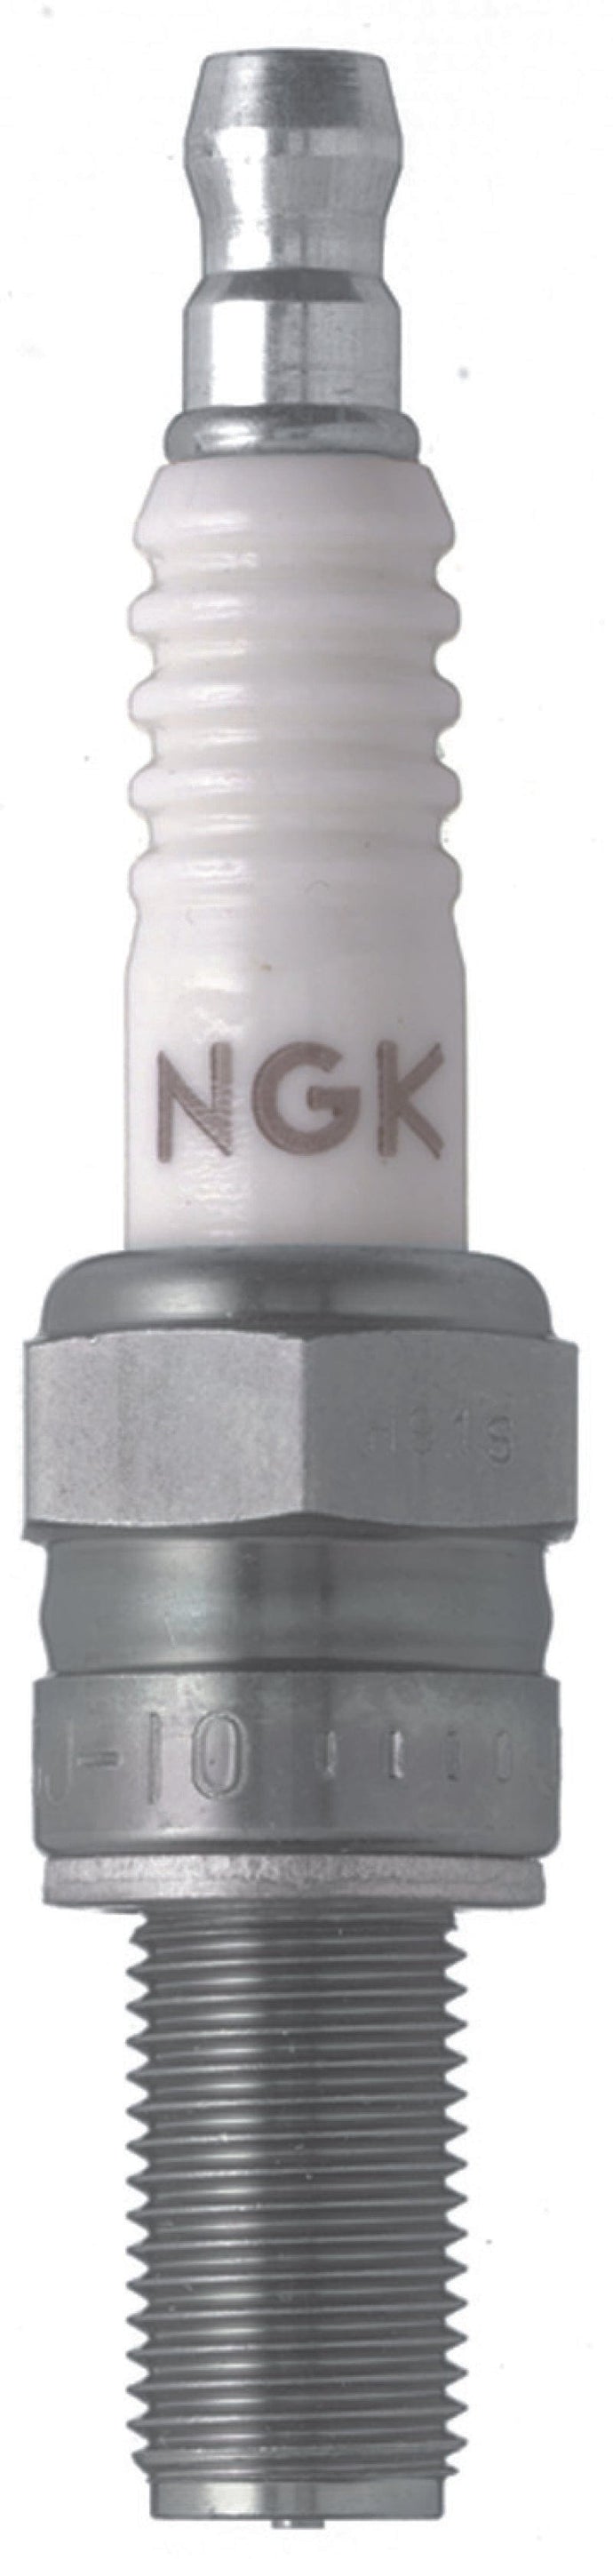 NGK NGK3235